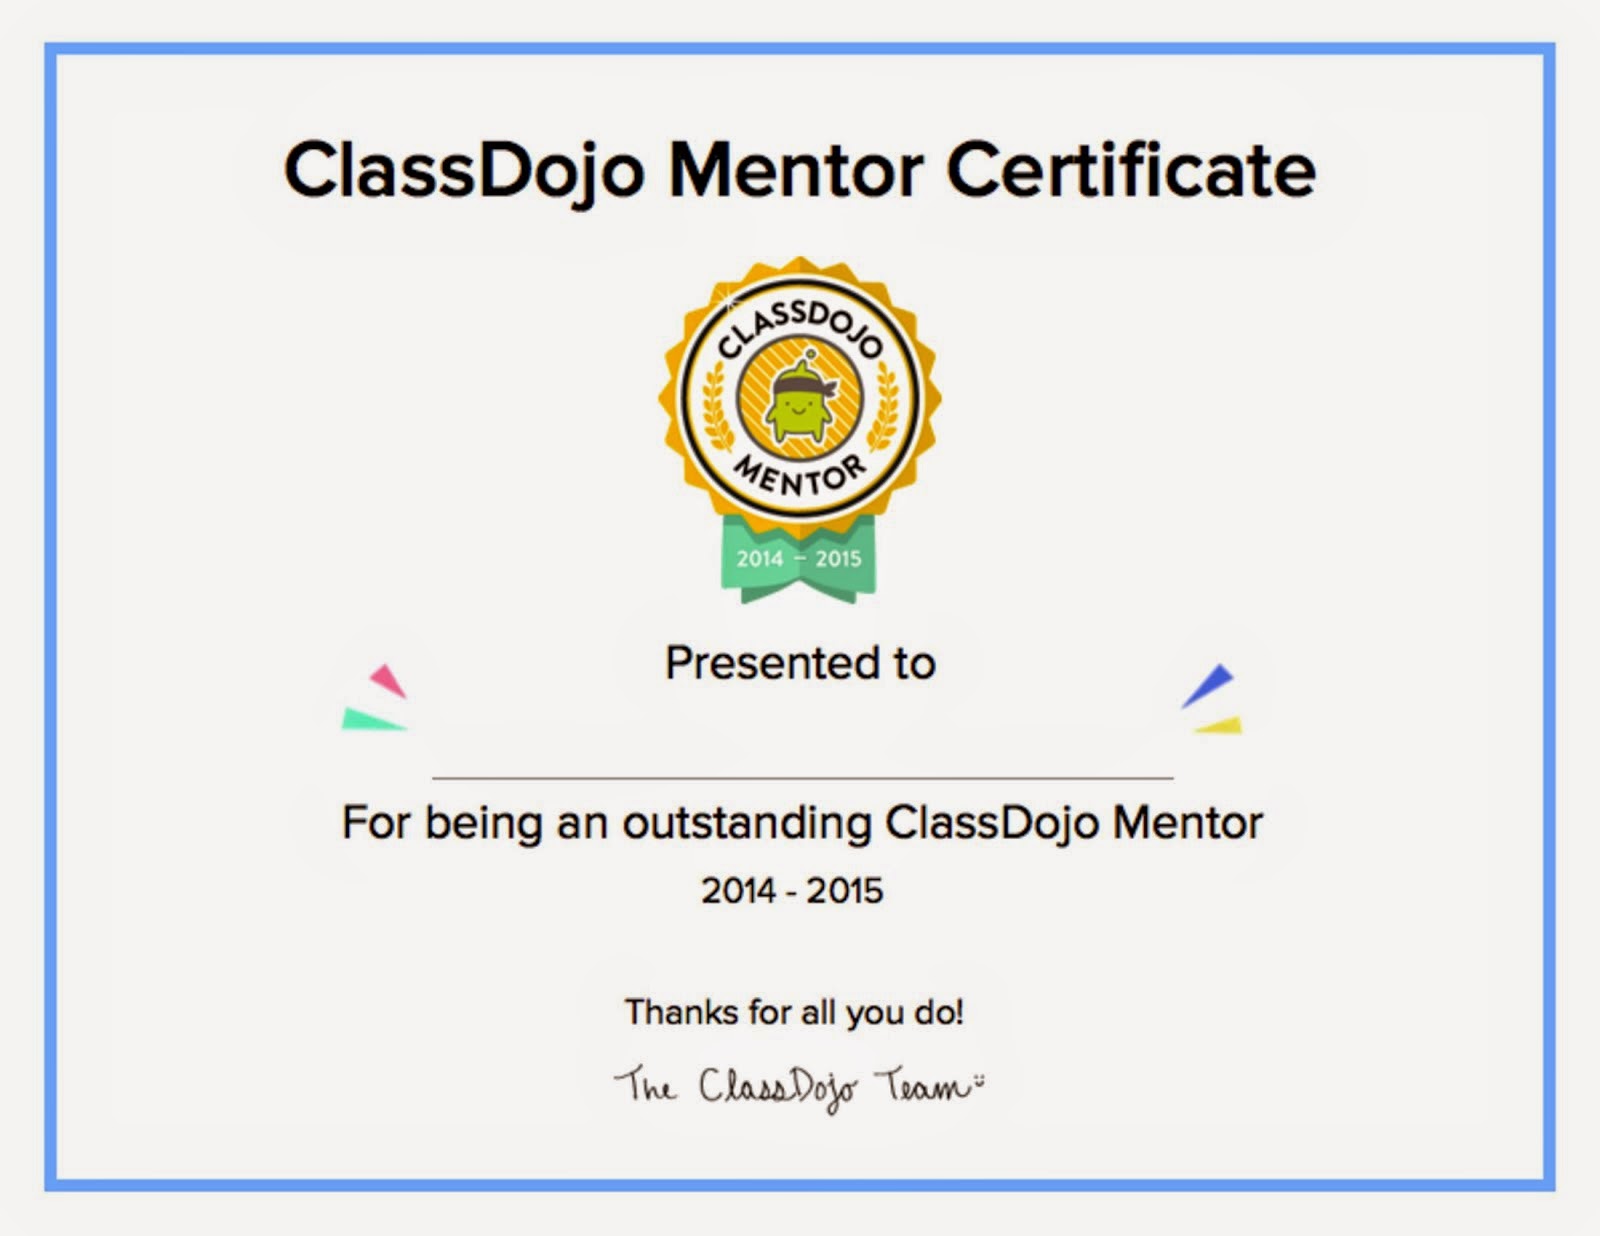 ClassDojo Mentor Certificate